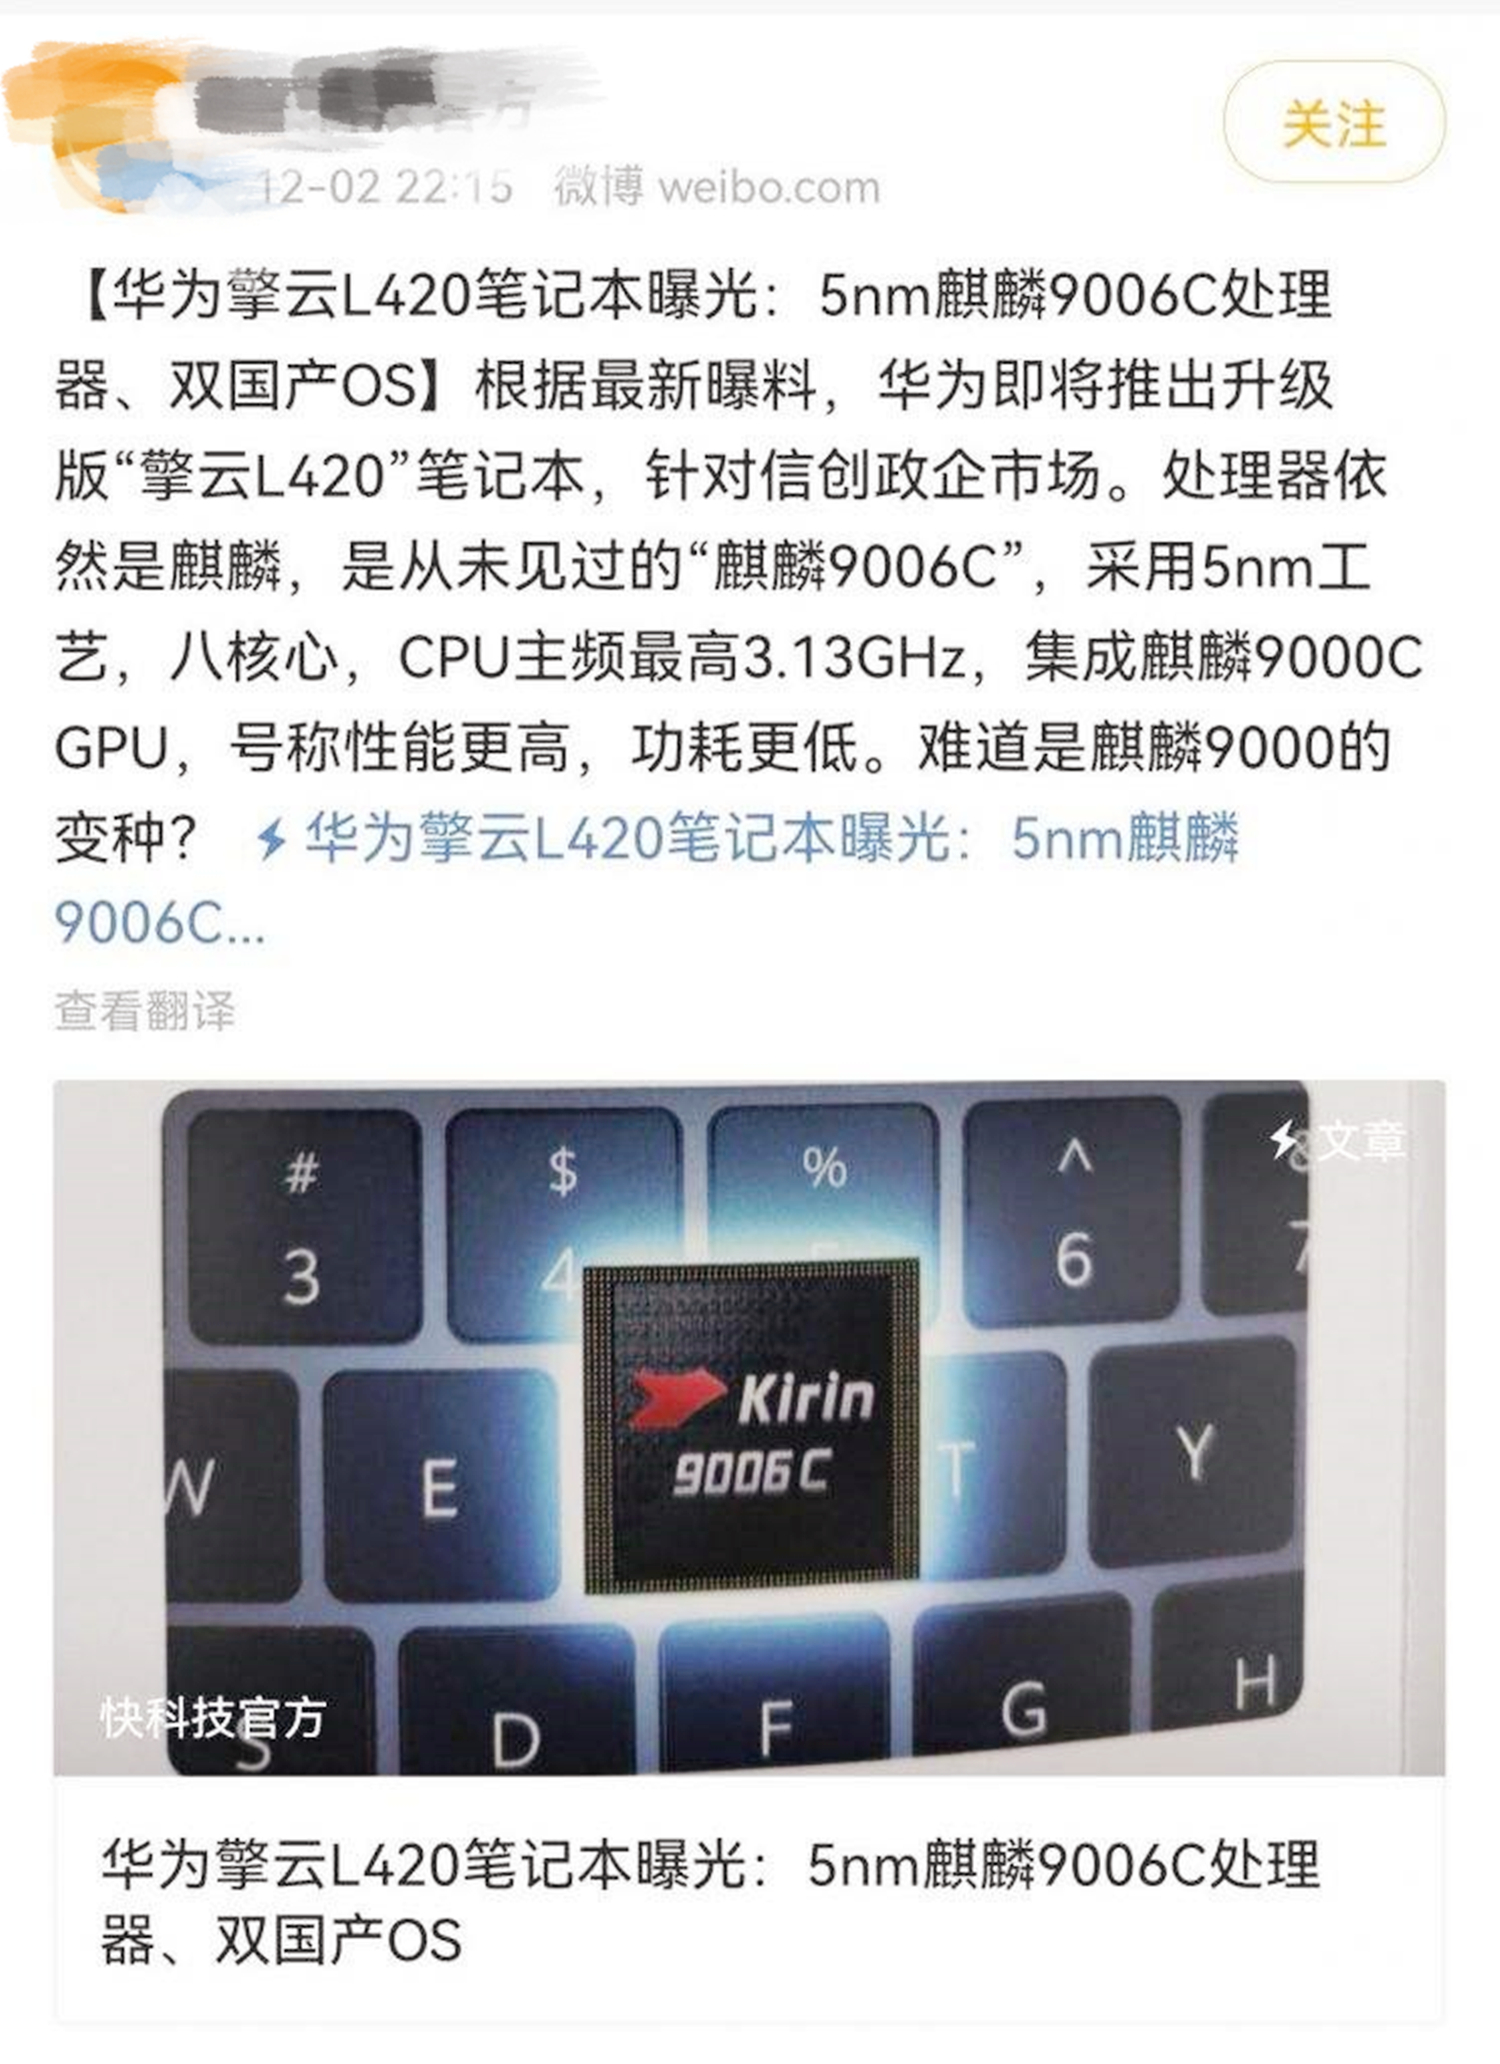 5nm Kirin 9006C chip comes out, Huawei successfully breaks through again